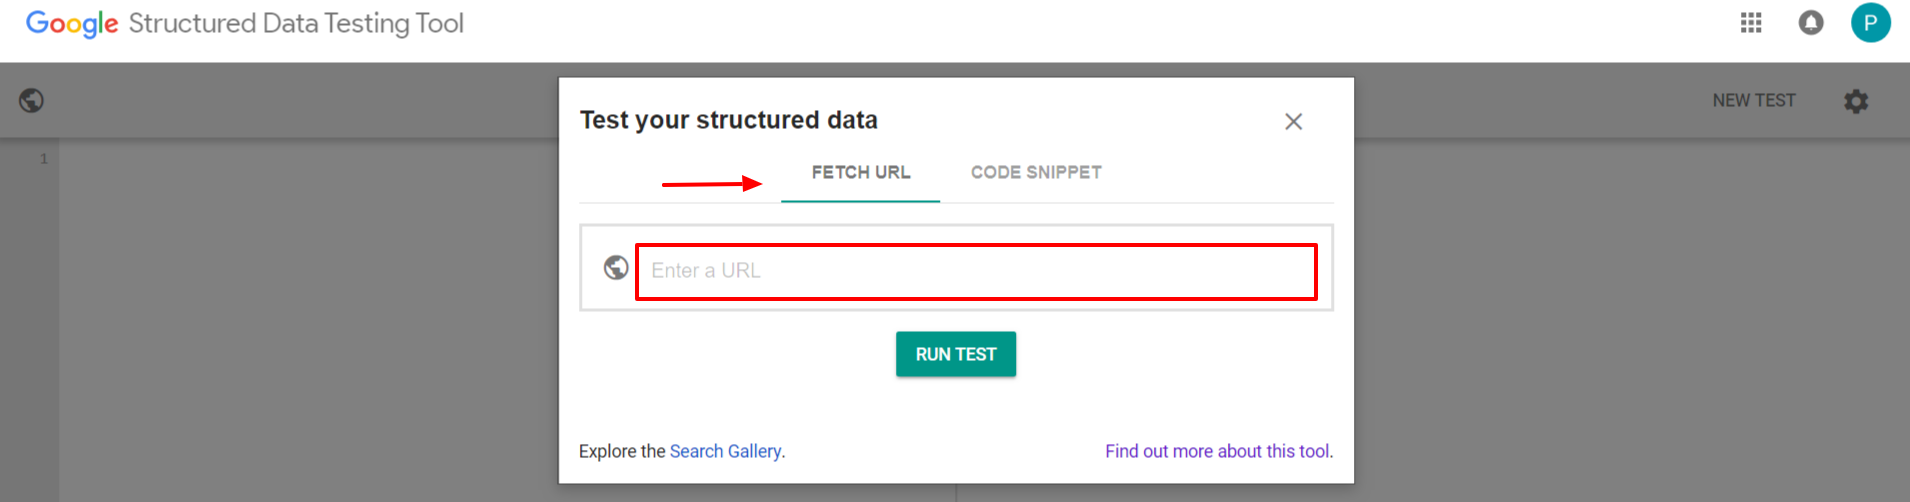 Google Stuctured Data Testing Tool